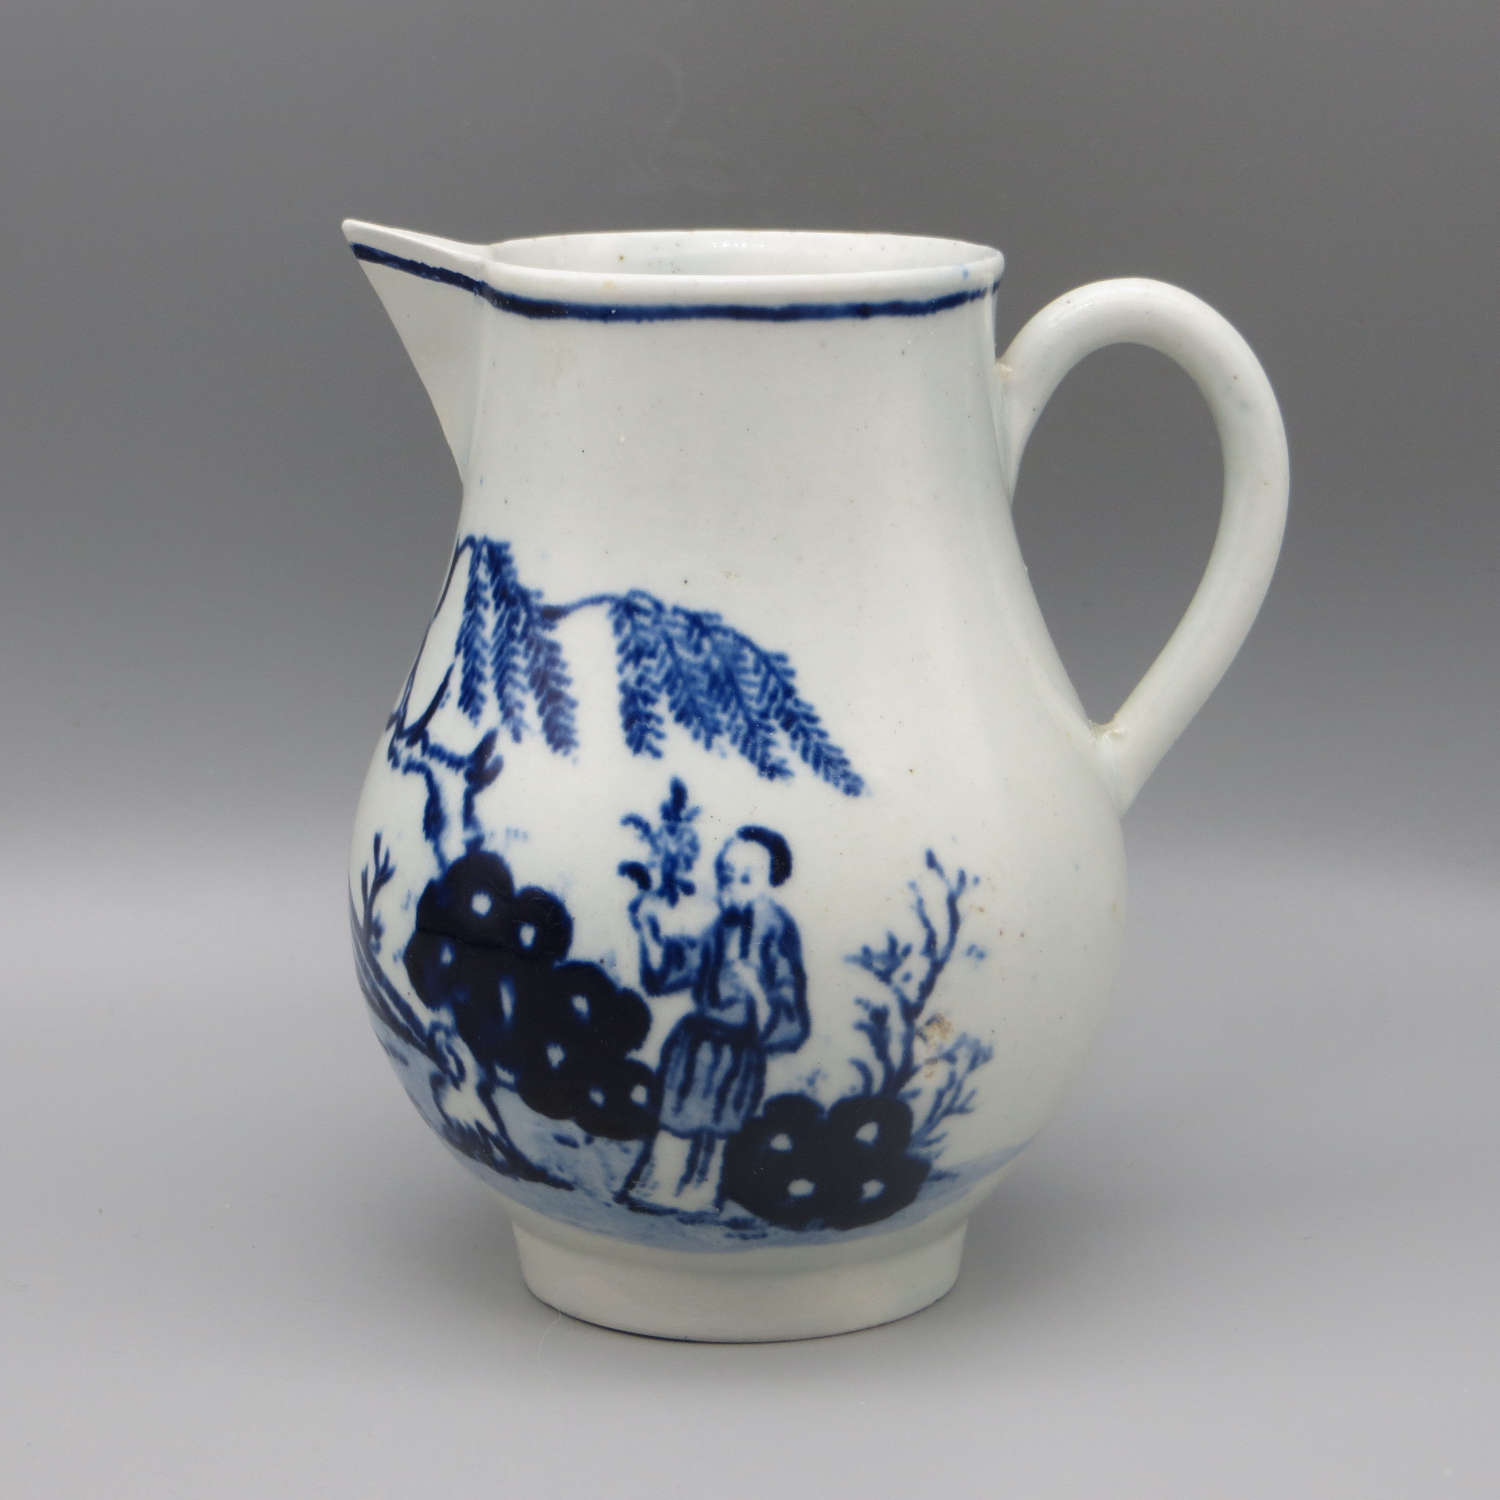 18th century Liverpool (Seth Pennington) porcelain cream jug